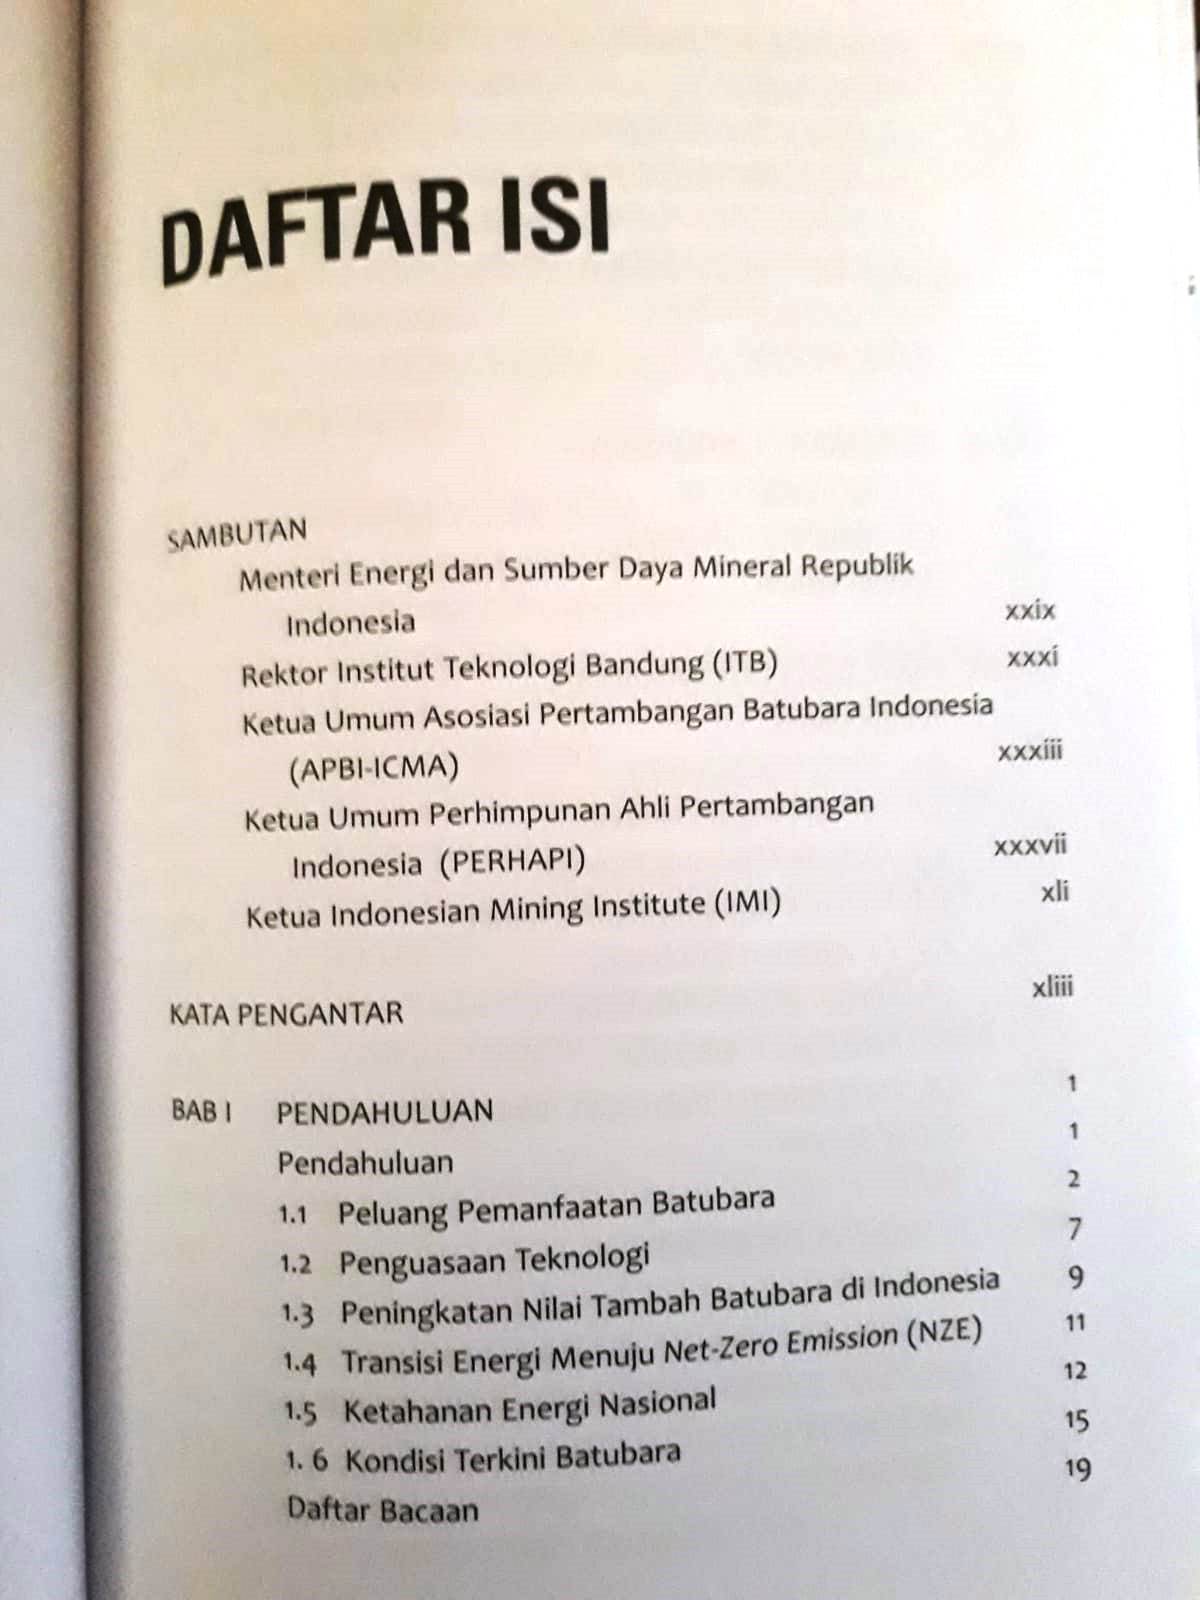 Daftar Isi Buku Era Baru Batubara Indonesia Karya Prof. Dr. Ir. Irwandy Arif, M.Sc Penerbit Gramedia Pustaka Utama